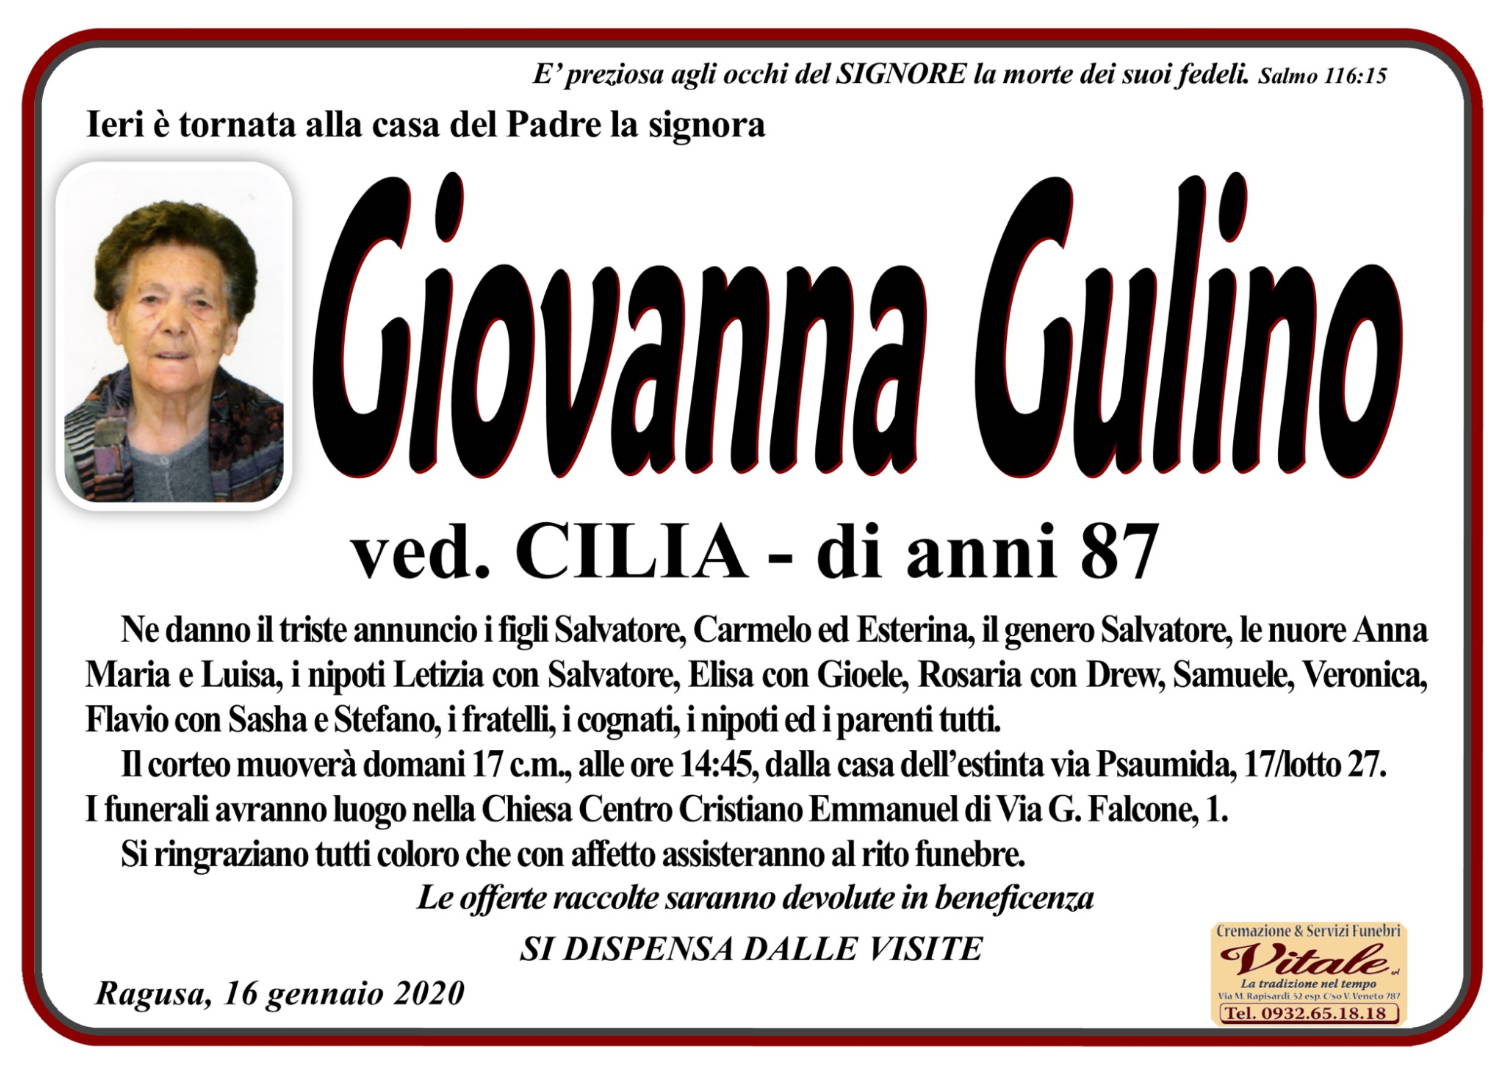 Giovanna Gulino